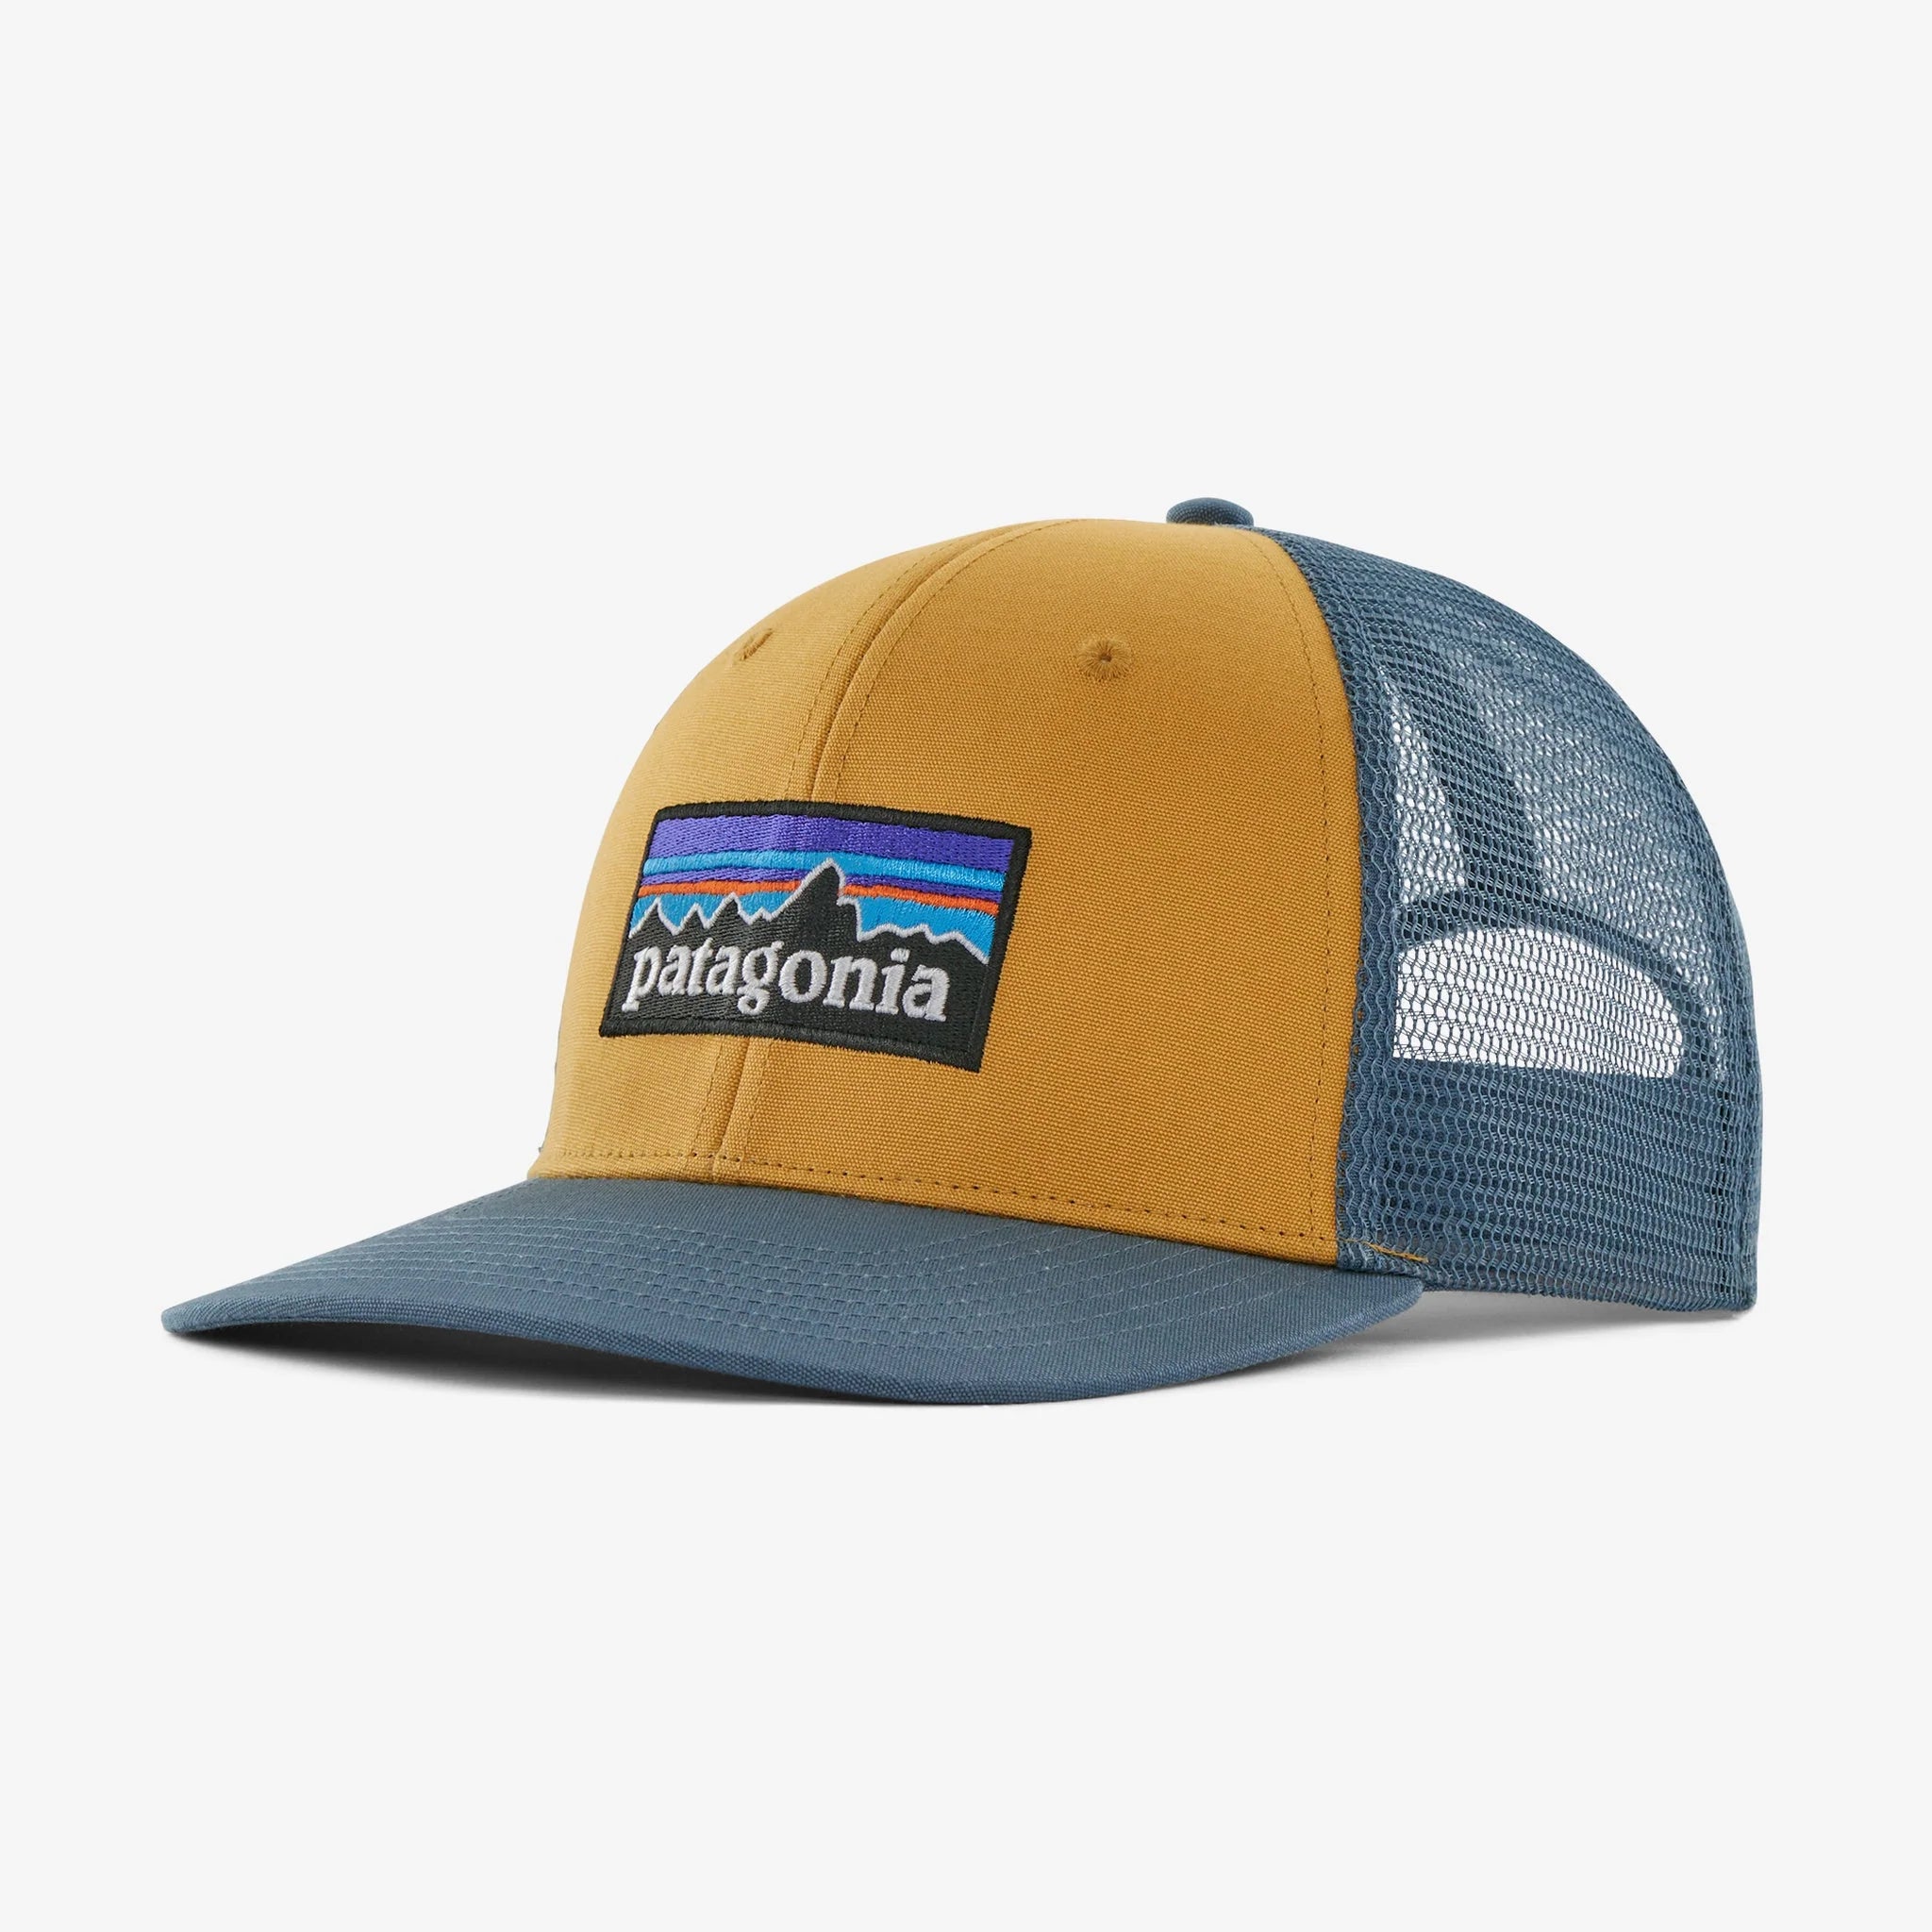 Patagonia P-6 Logo Trucker Hat (Unisex) - Pufferfish Gold - Find Your Feet Australia Hobart Launceston Tasmania